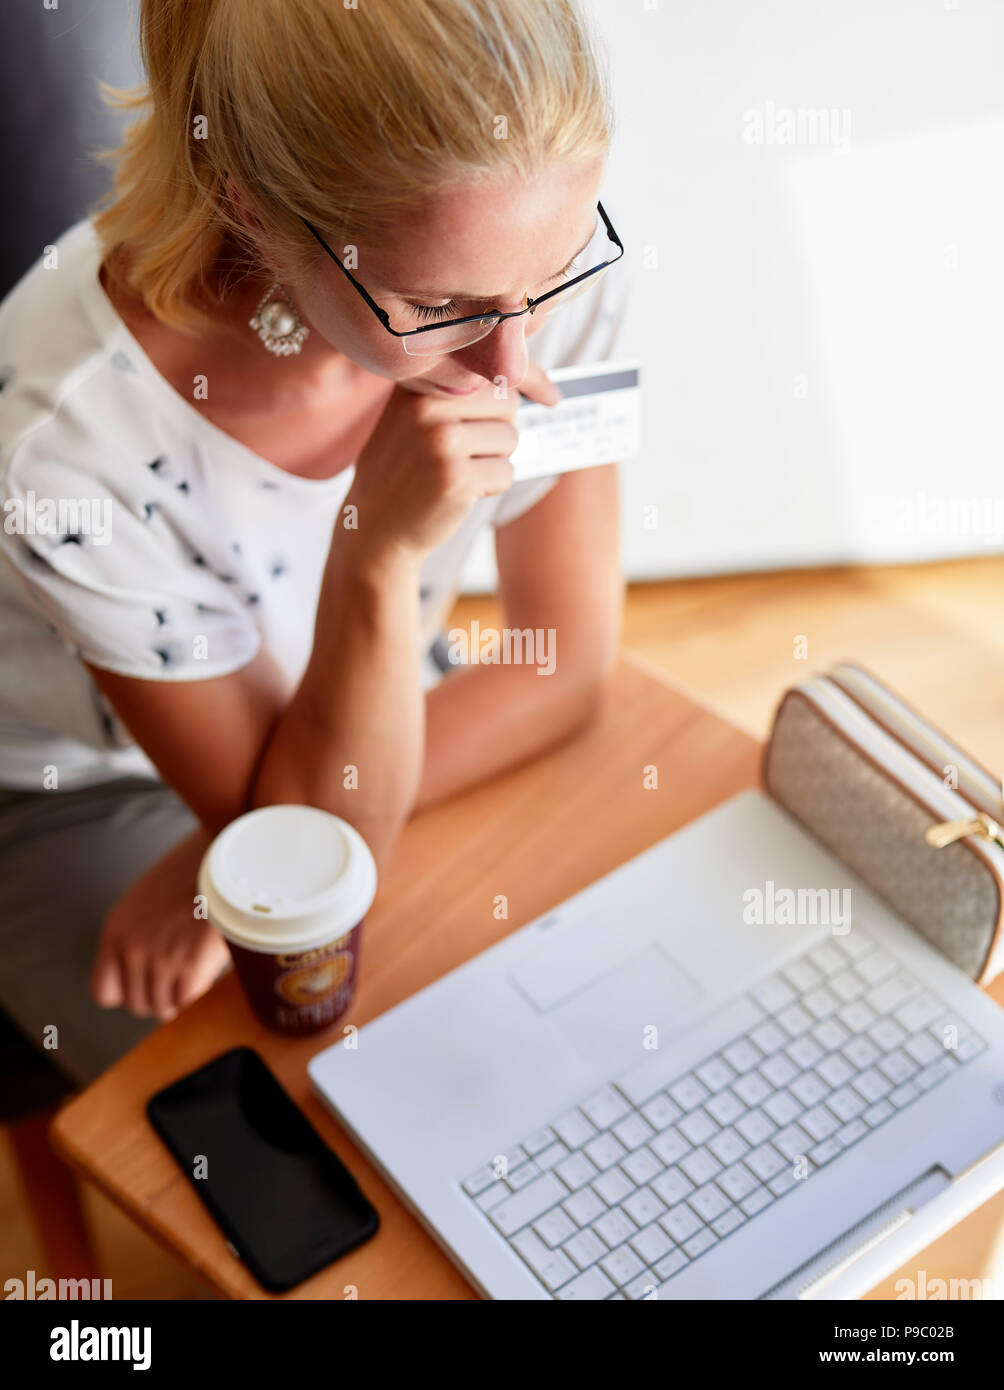 Woman using laptop online Stock Photo